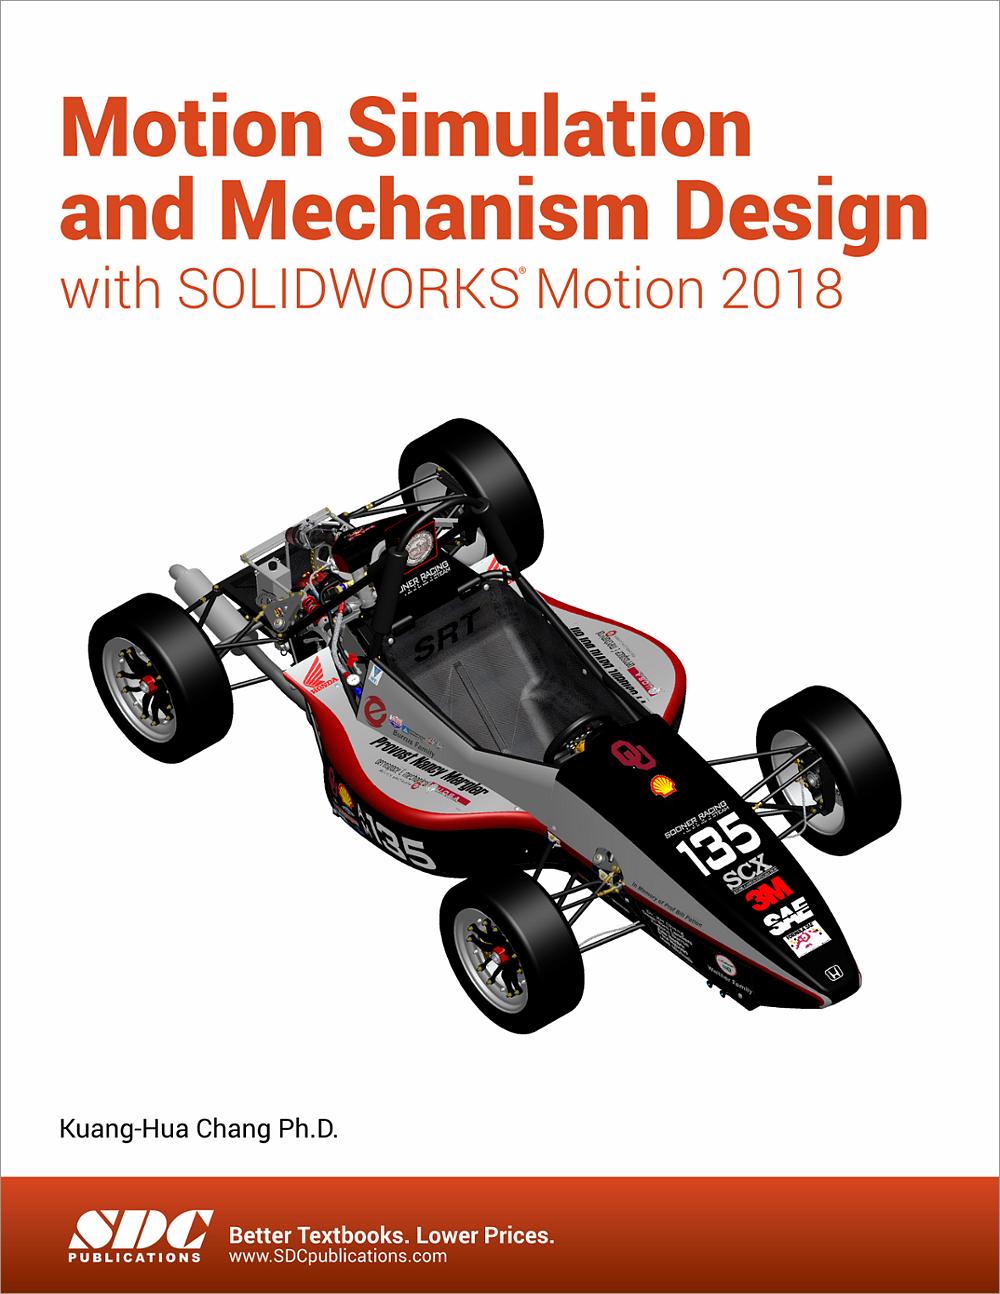 solidworks simulation book download